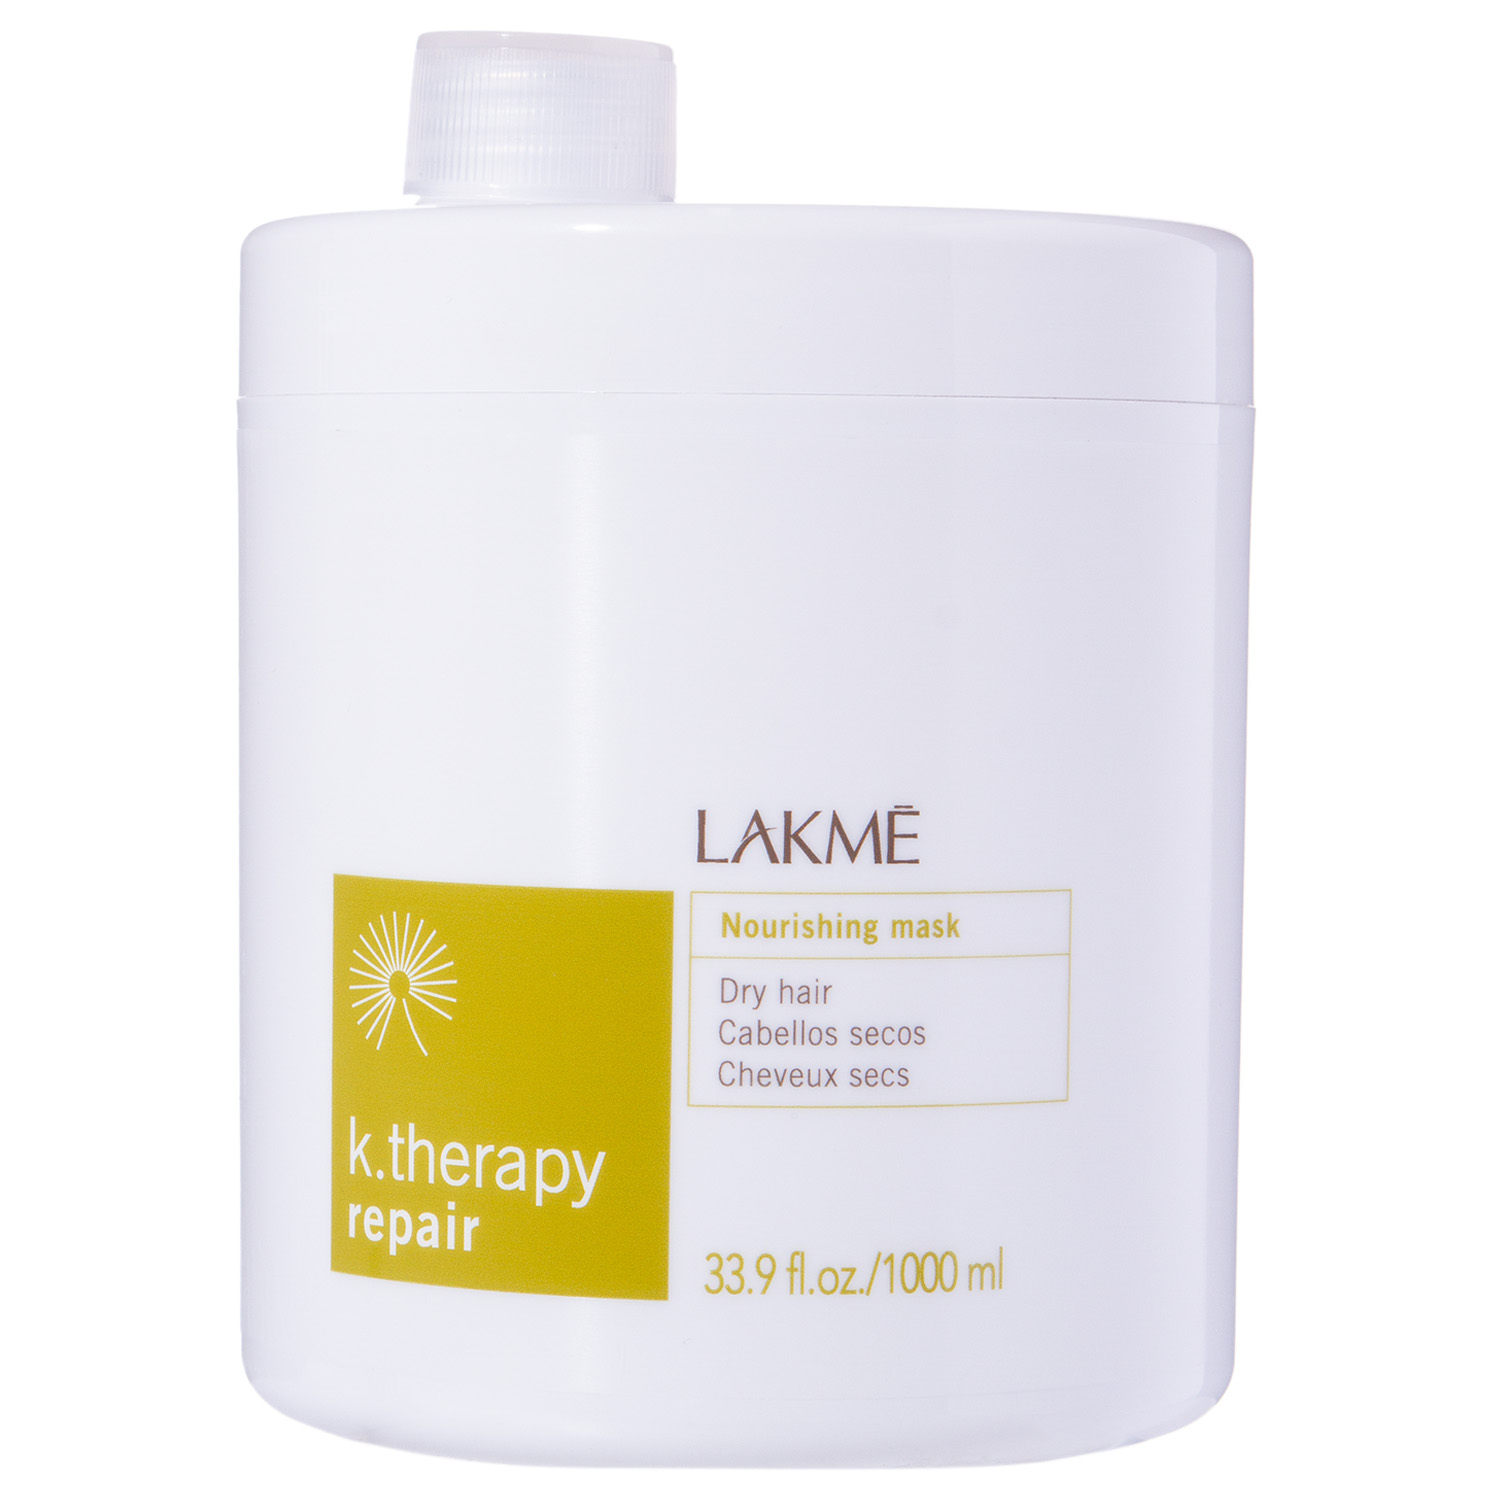 Lakme Маска питательная для сухих волос 1000 мл (Lakme, K.Therapy) от Socolor